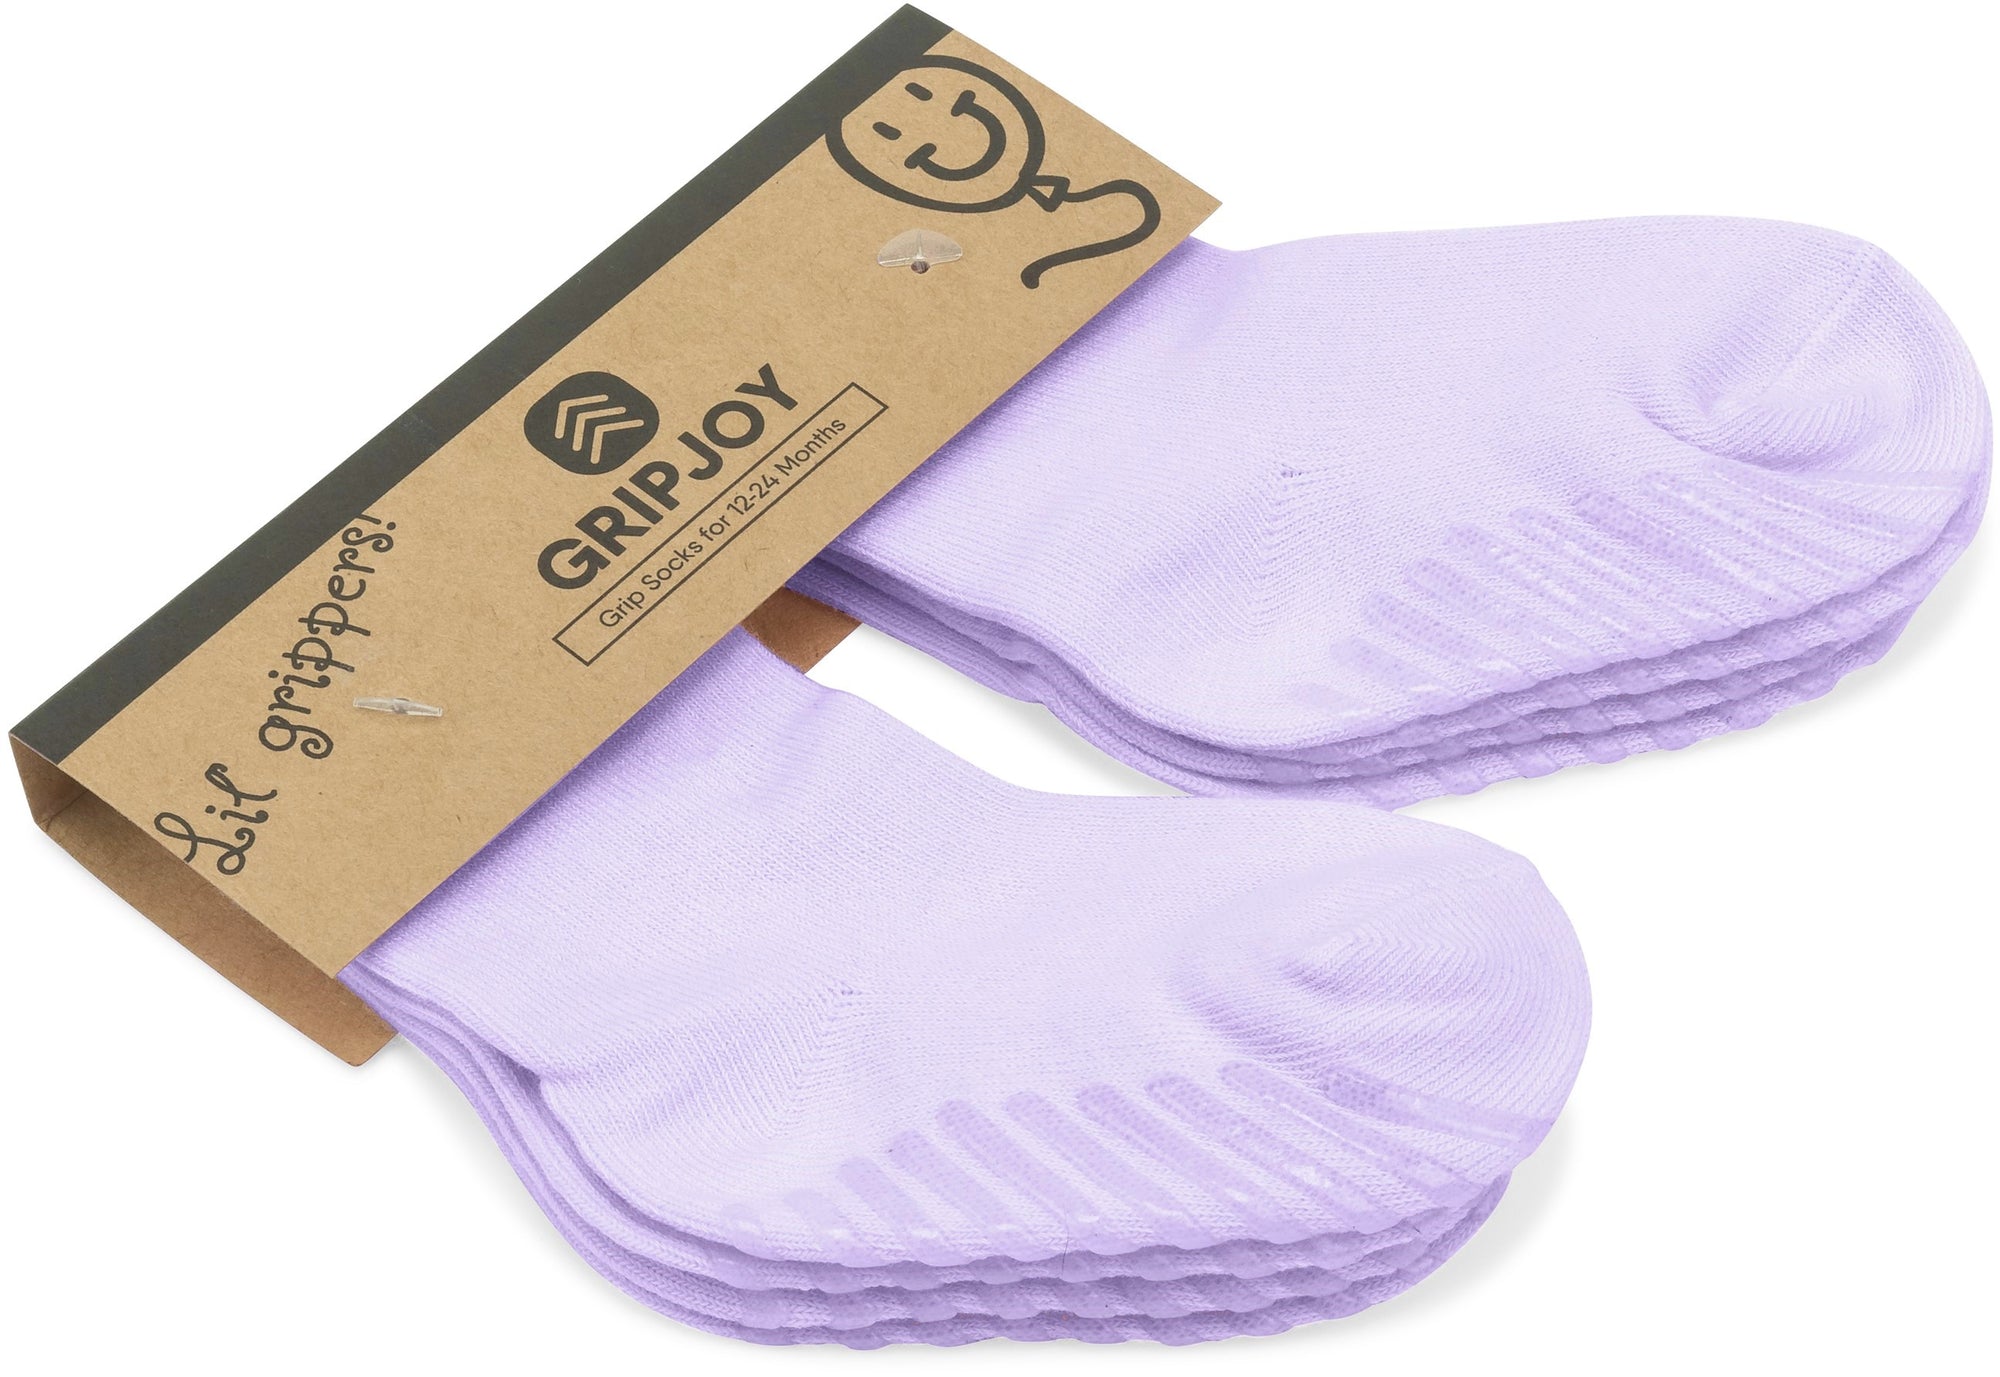 Grip Socks for Toddlers & Kids 12-24 Months 4-Pack - Gripjoy Socks